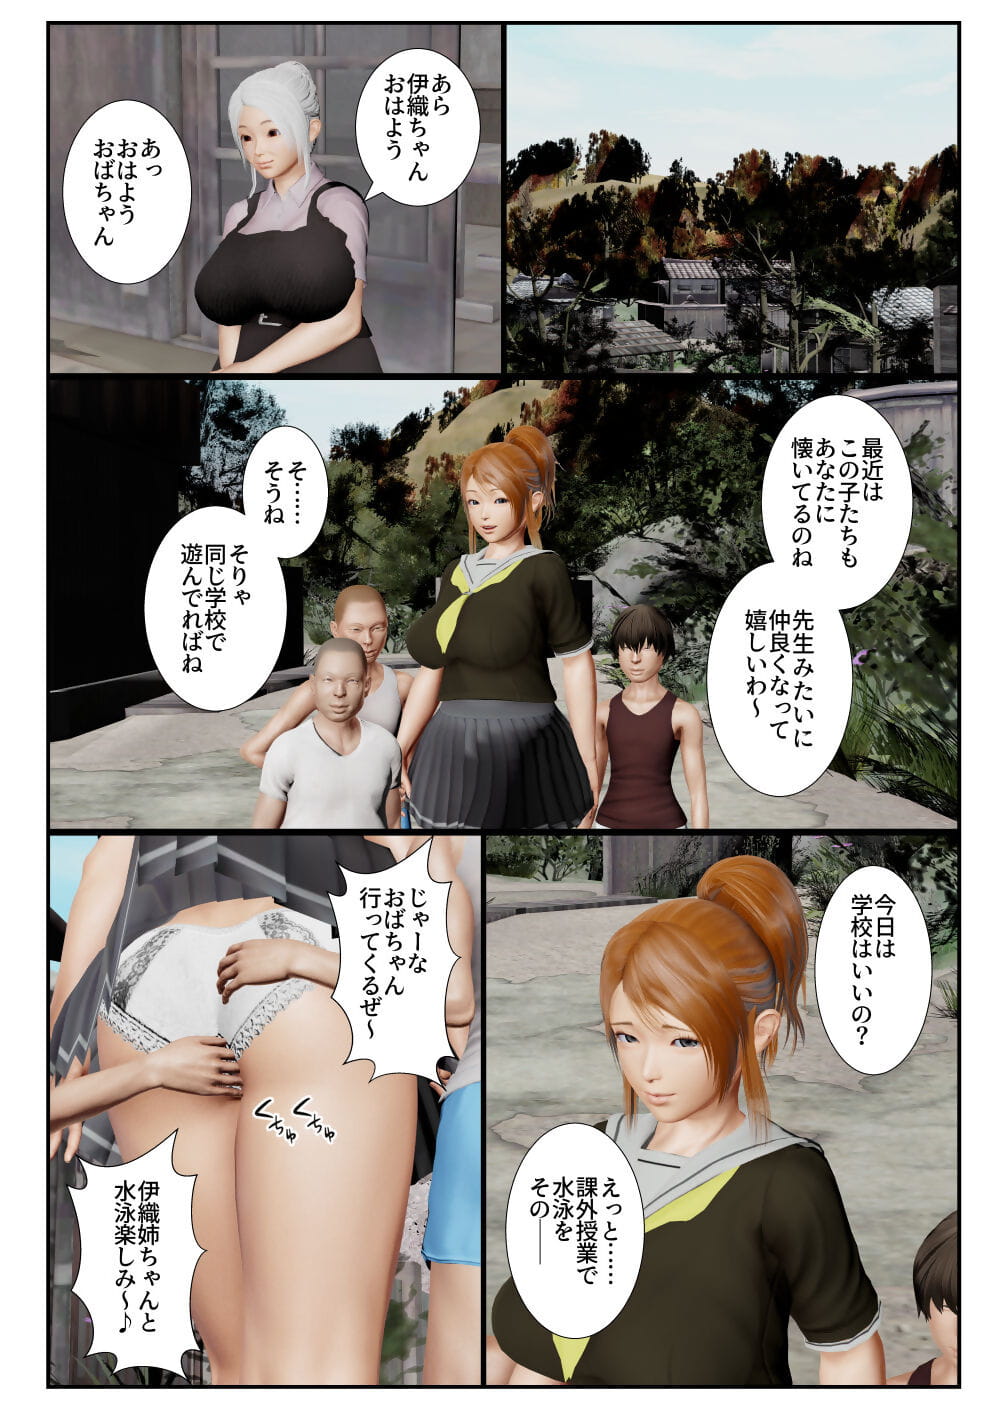 goriramu Touma kenshi shiriizu Démon swordsman série PARTIE 5 page 1